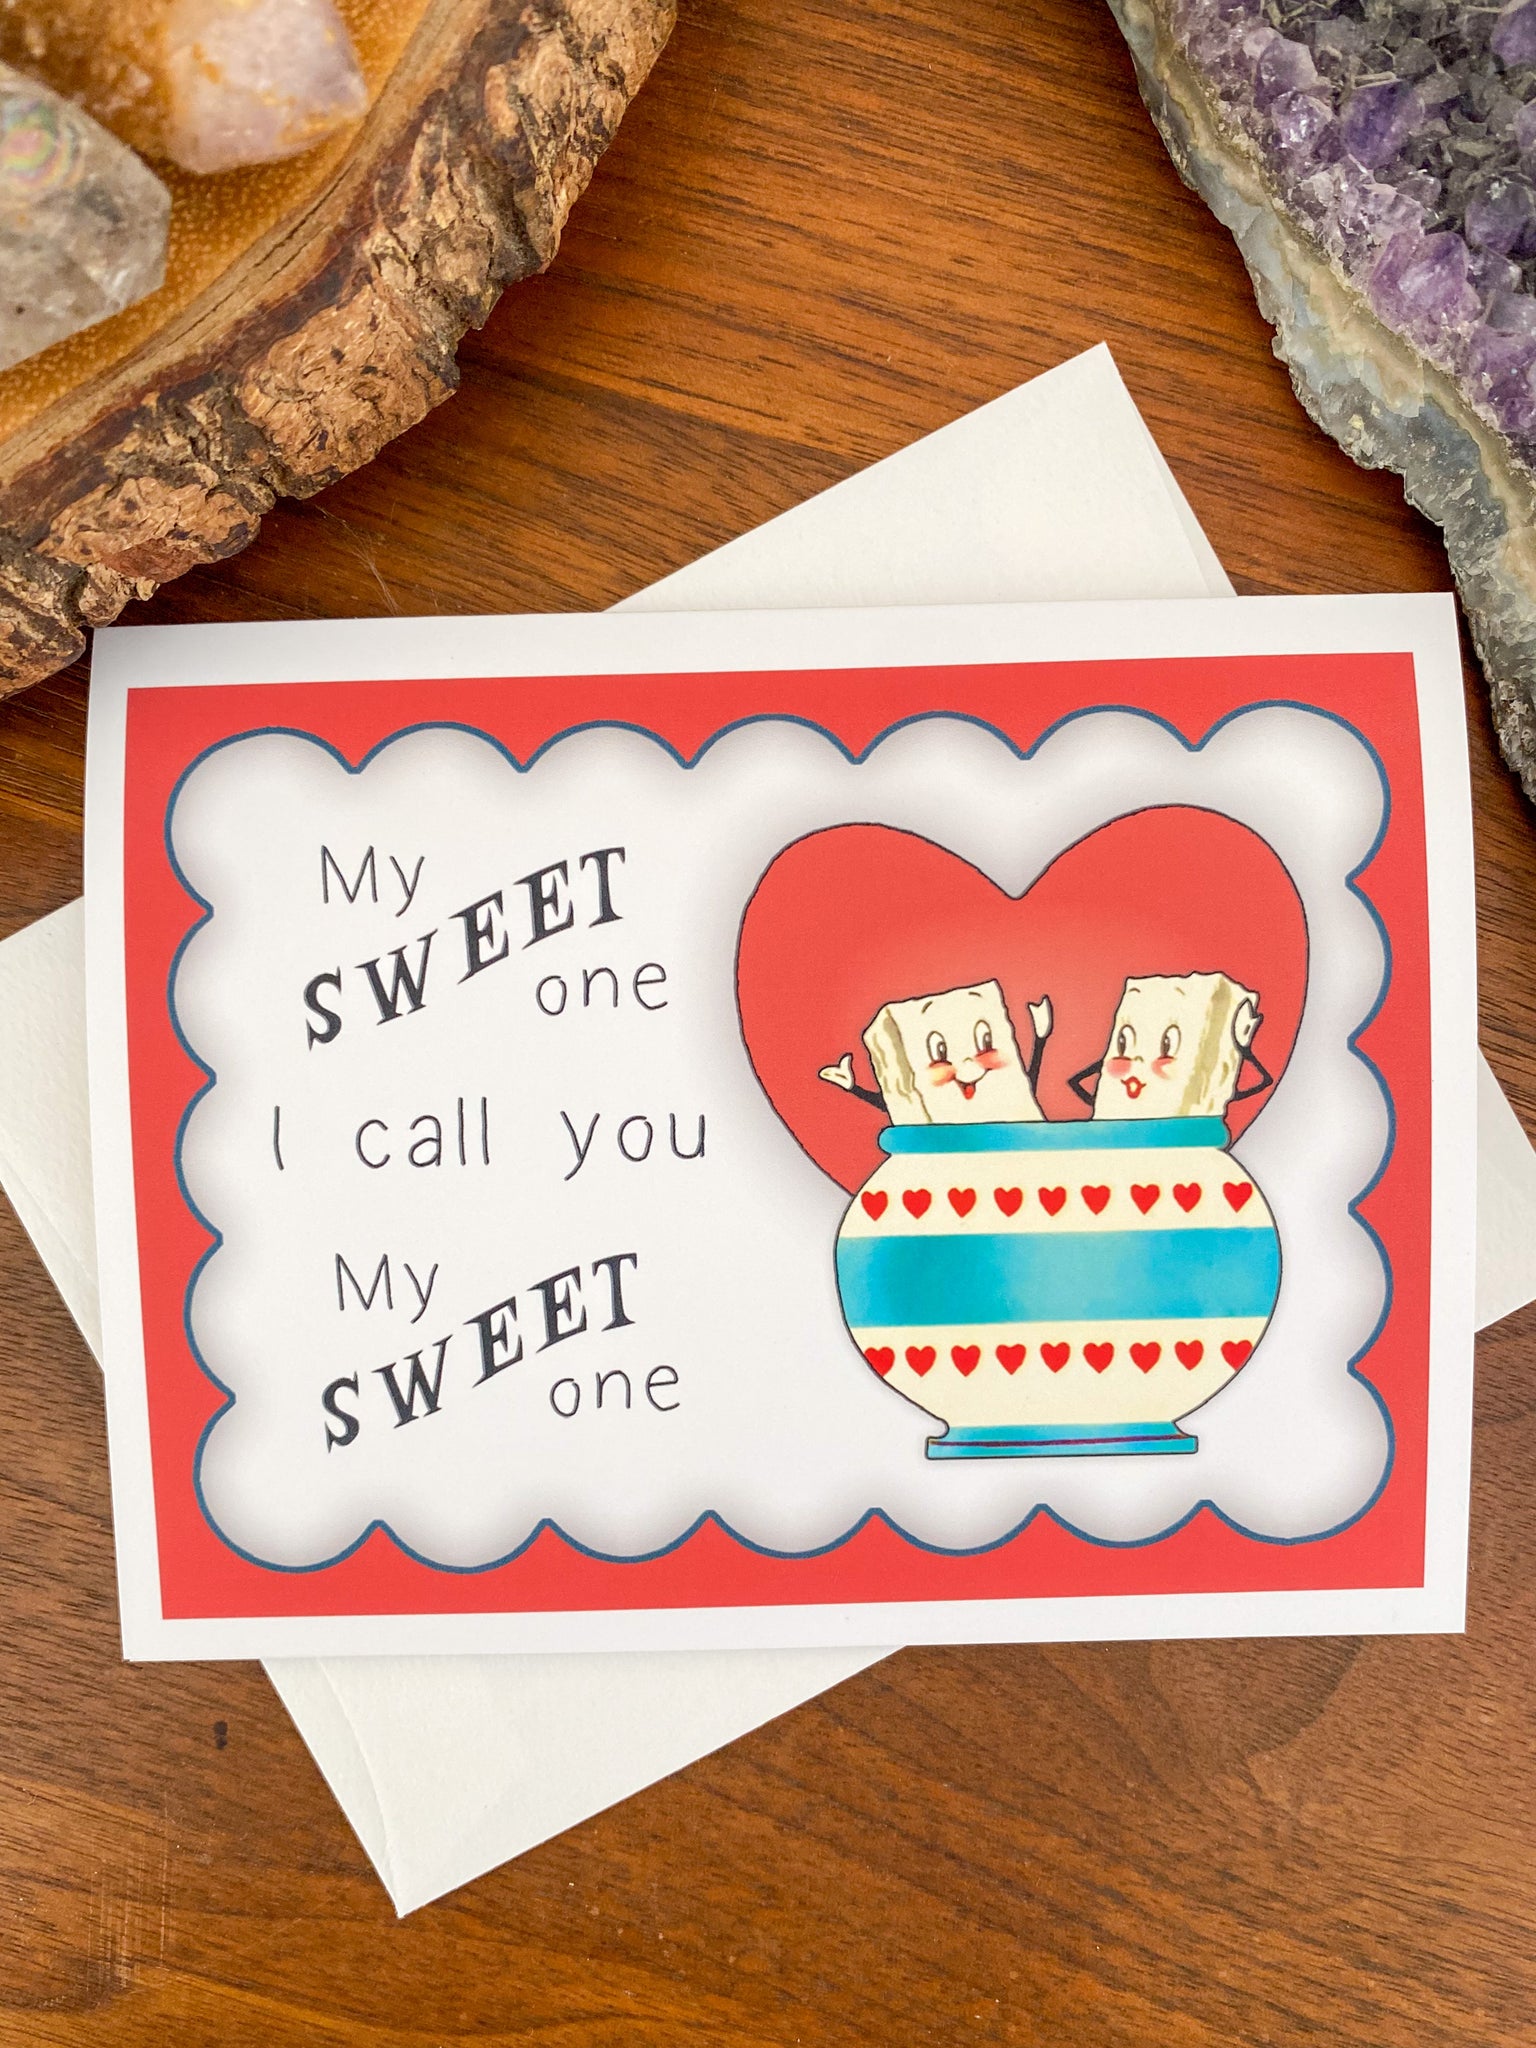 Phish Valentine's Day Card: My Sweet One